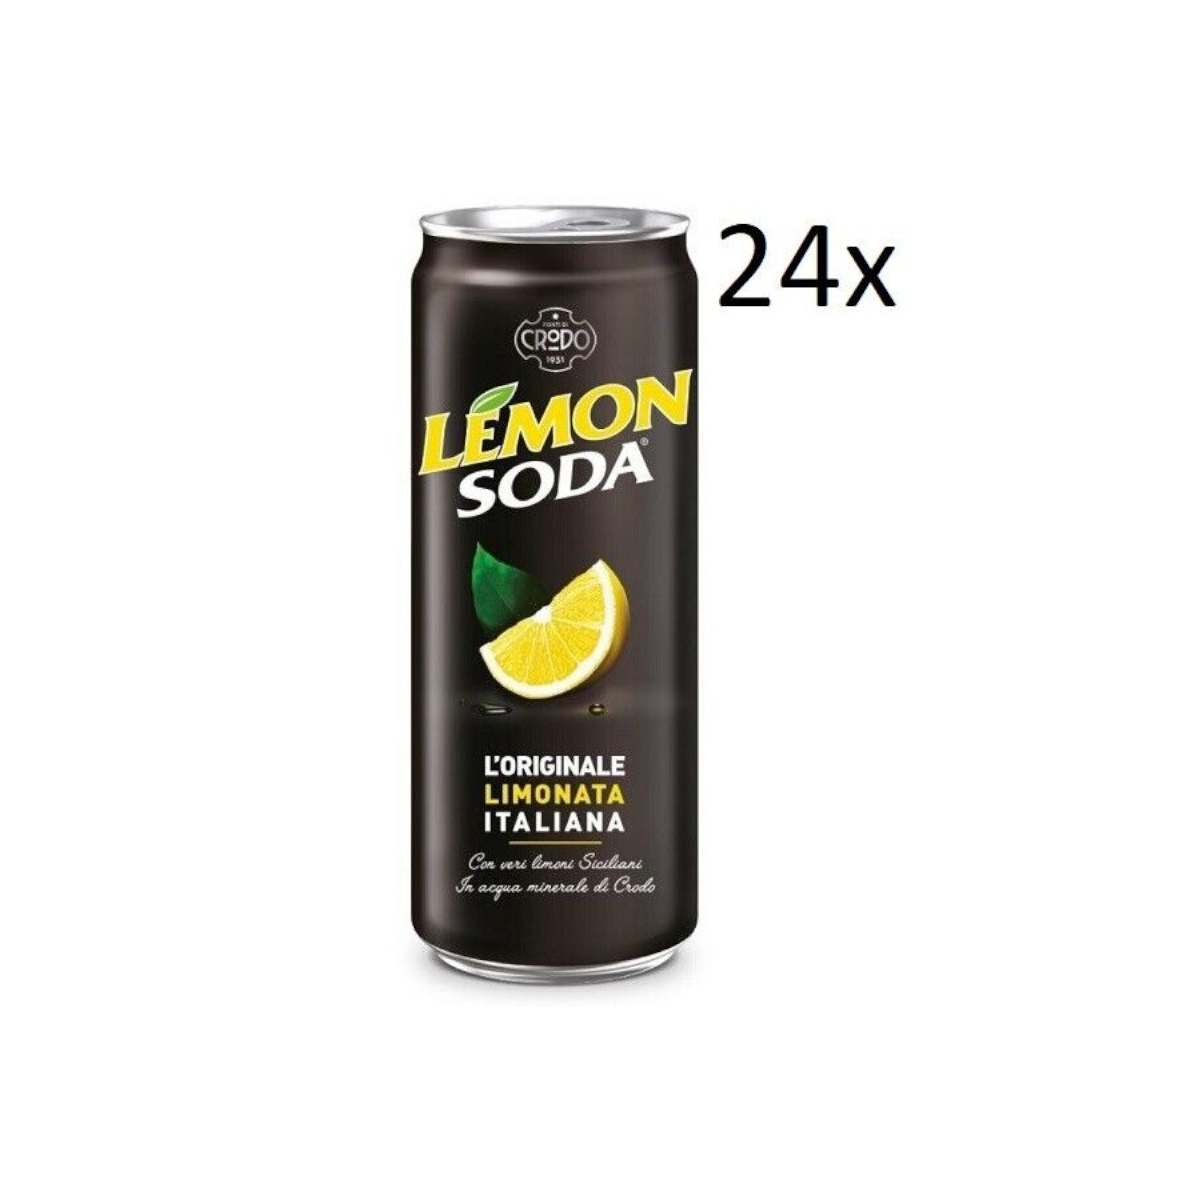 24x Dose Lemonsoda 330ml Campari Group Lemon soda Zitrone italienisch Limonata